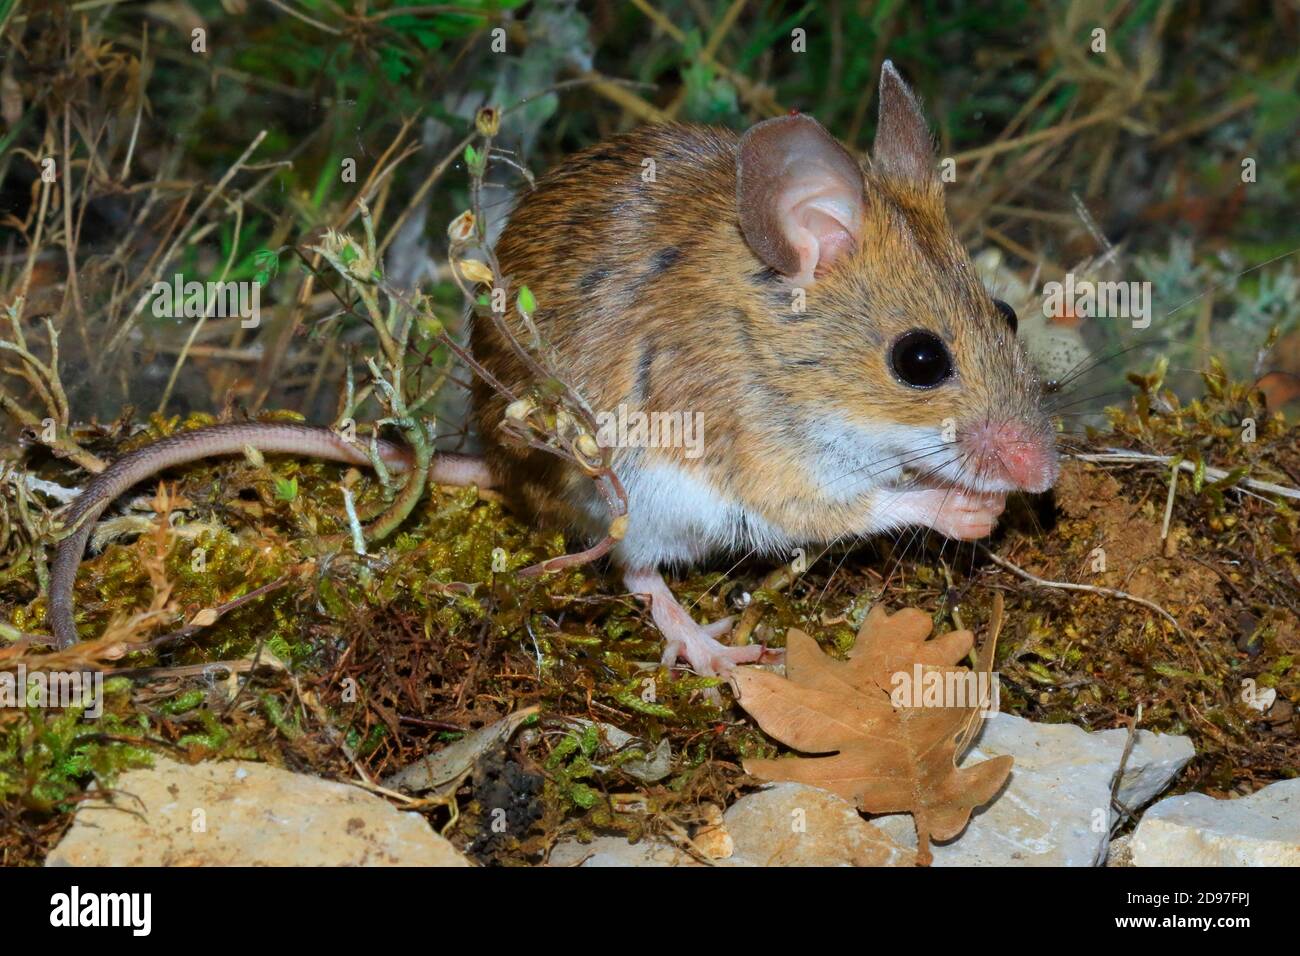 Ratón de cola larga (Apodemus sylvaticus) comiendo Foto de stock